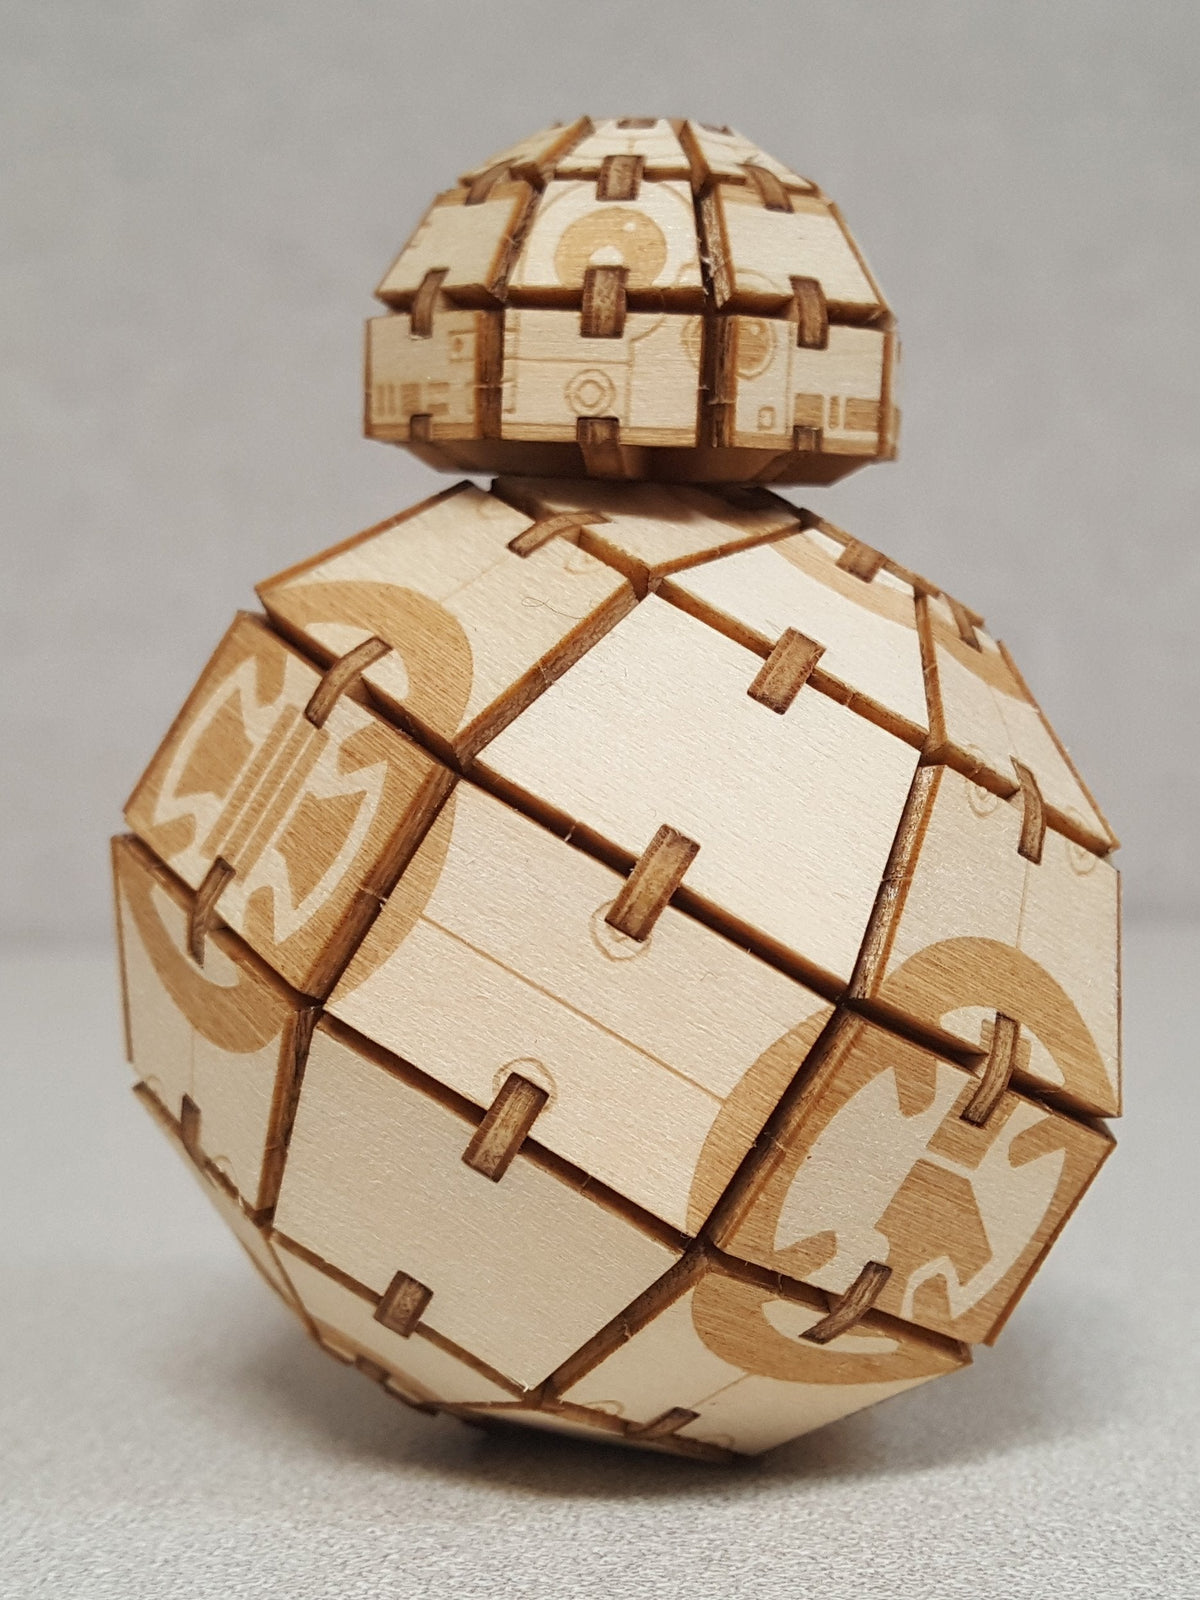 Incredibuilds Star Wars Bb8 3D Wood Model